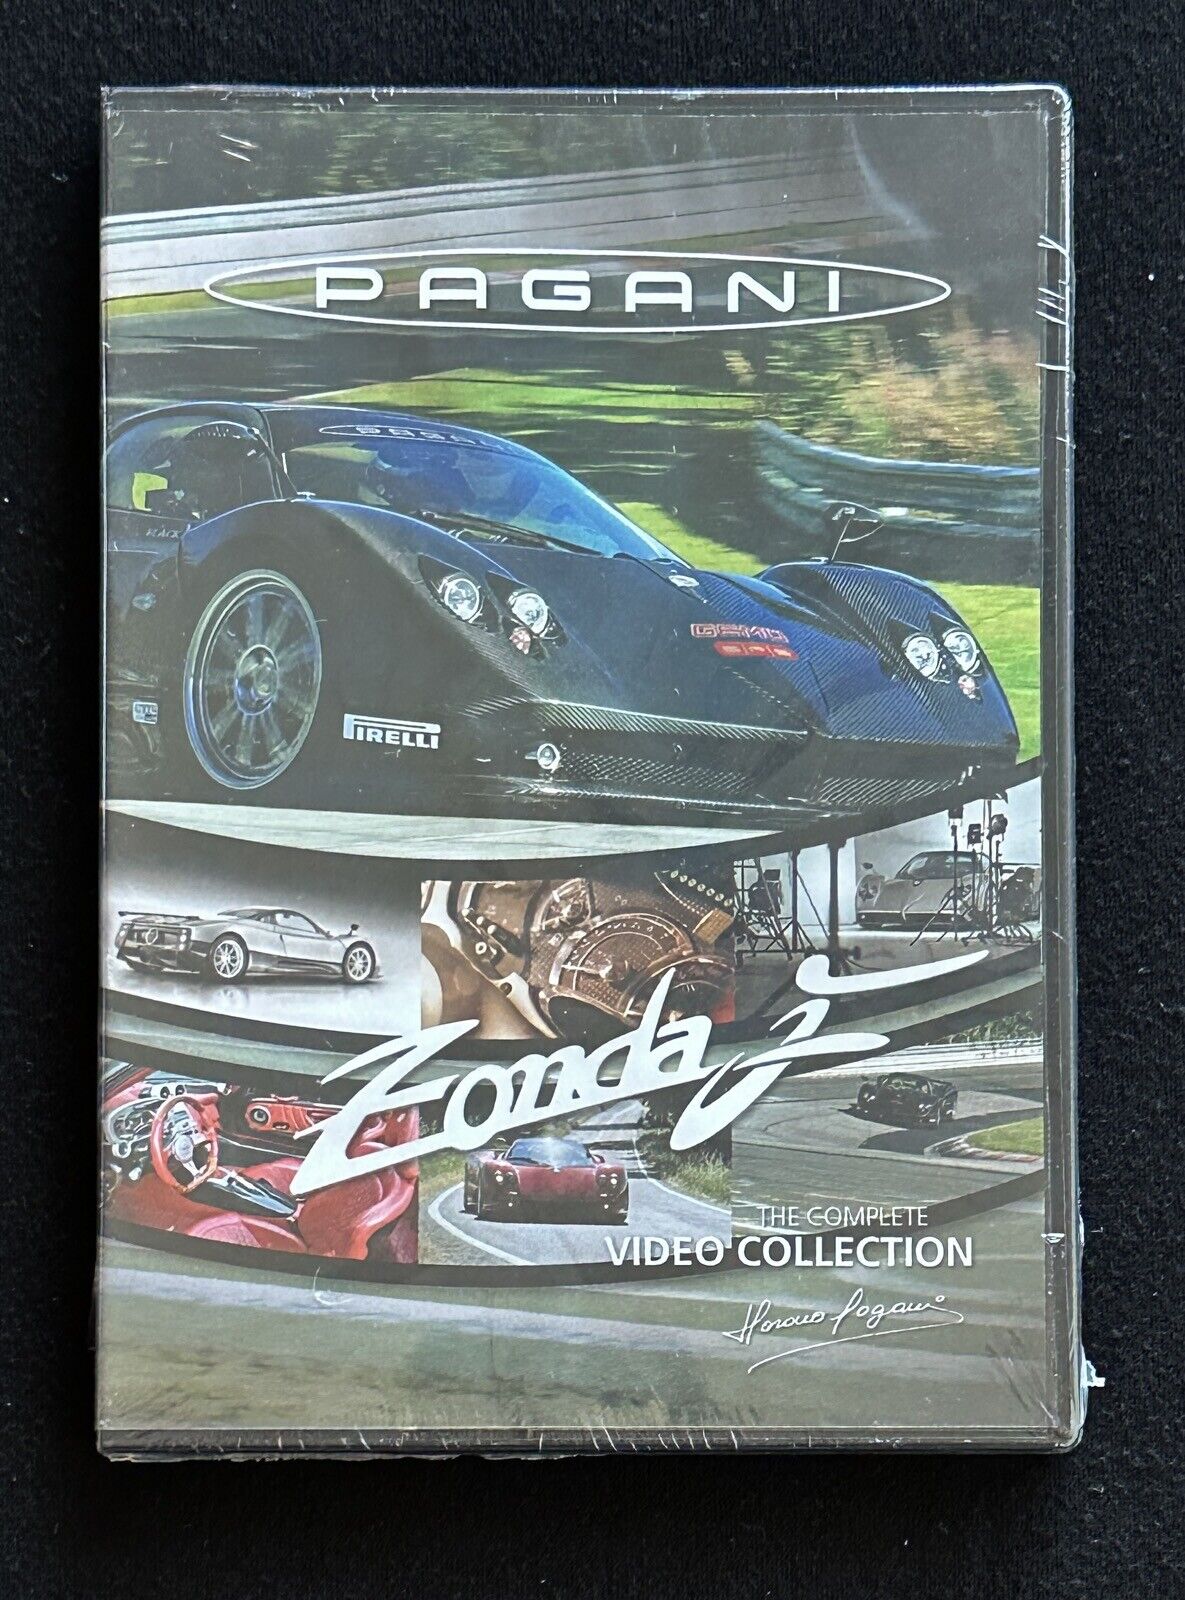  2007 Pagani Zonda F The Complete Video Collection DVD NEW Horatio Pagani